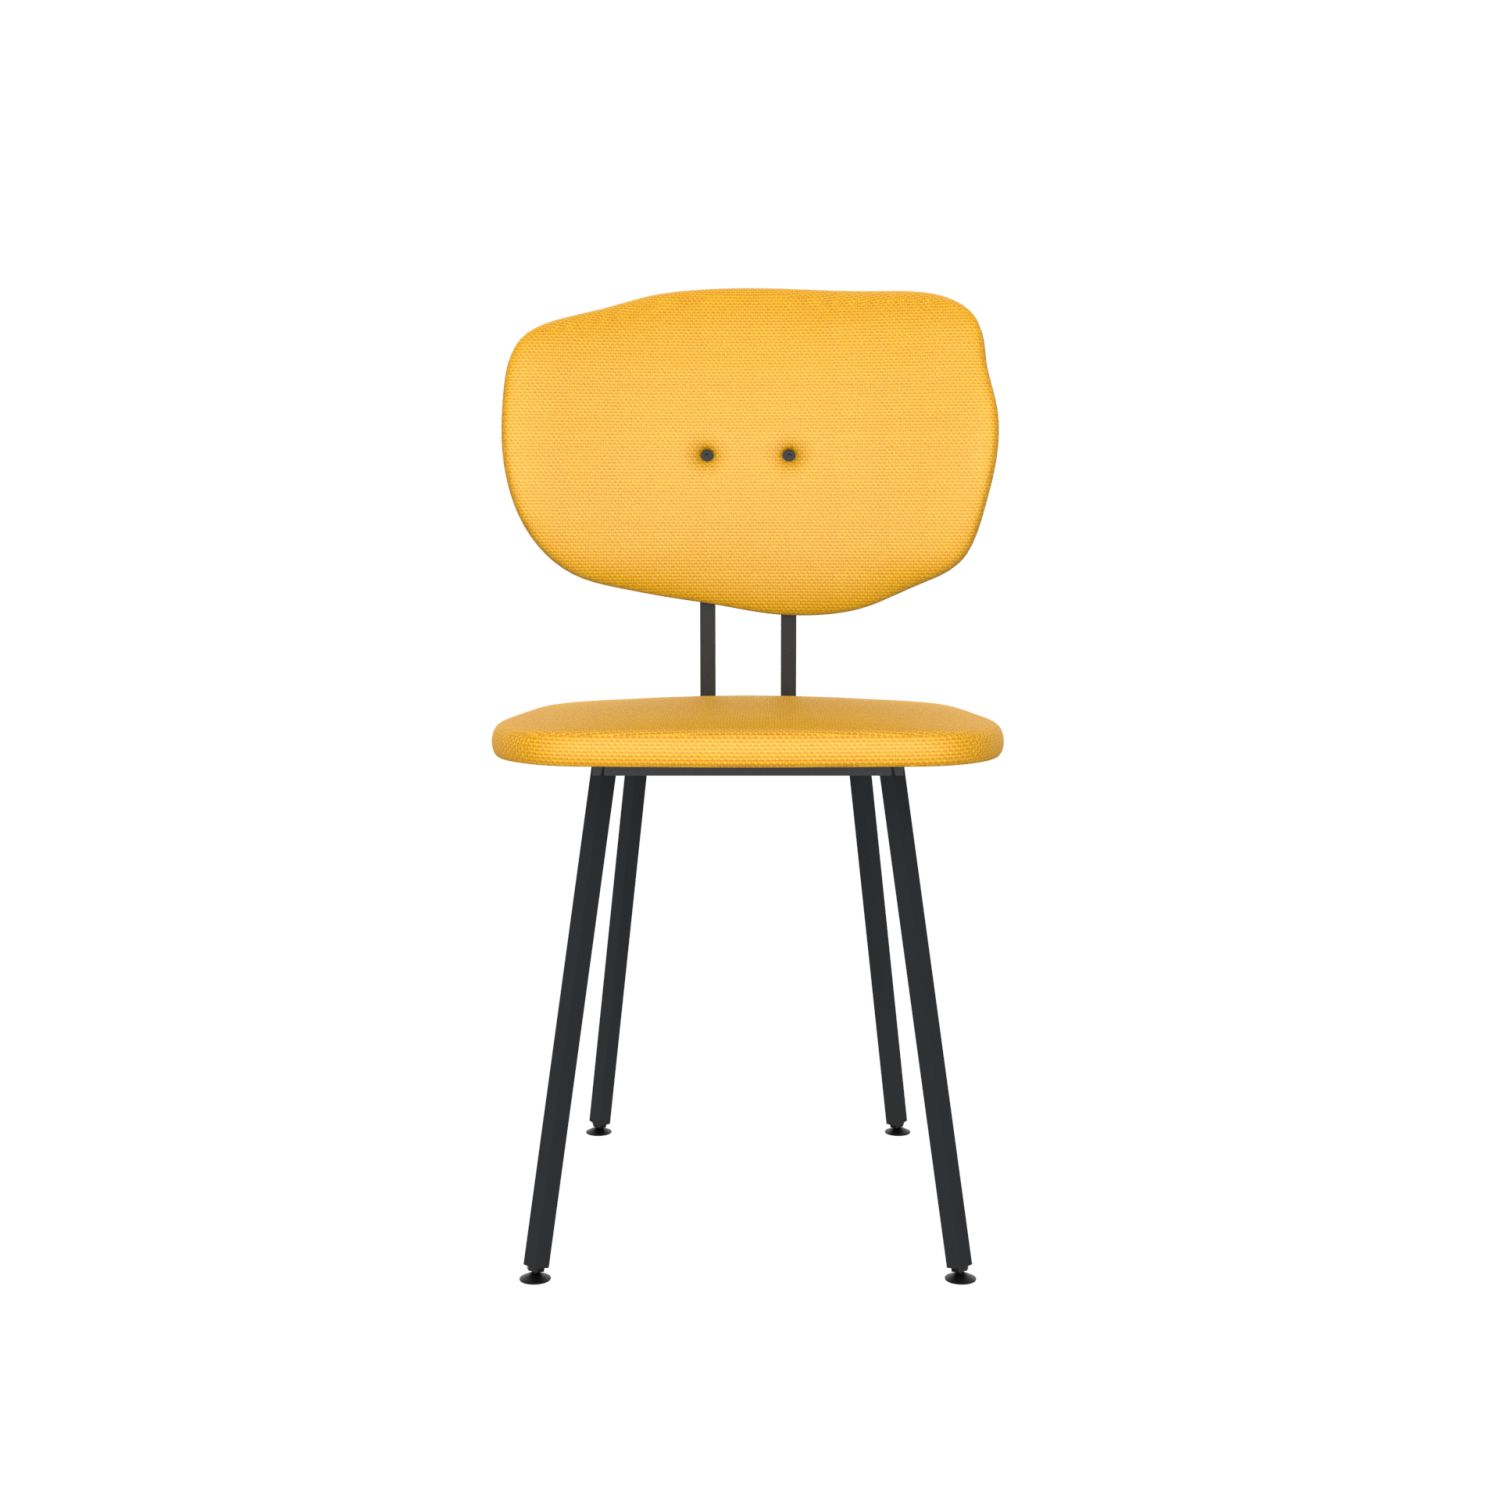 lensvelt maarten baas chair 101 not stackable without armrests backrest f lemon yellow 051 black ral9005 hard leg ends